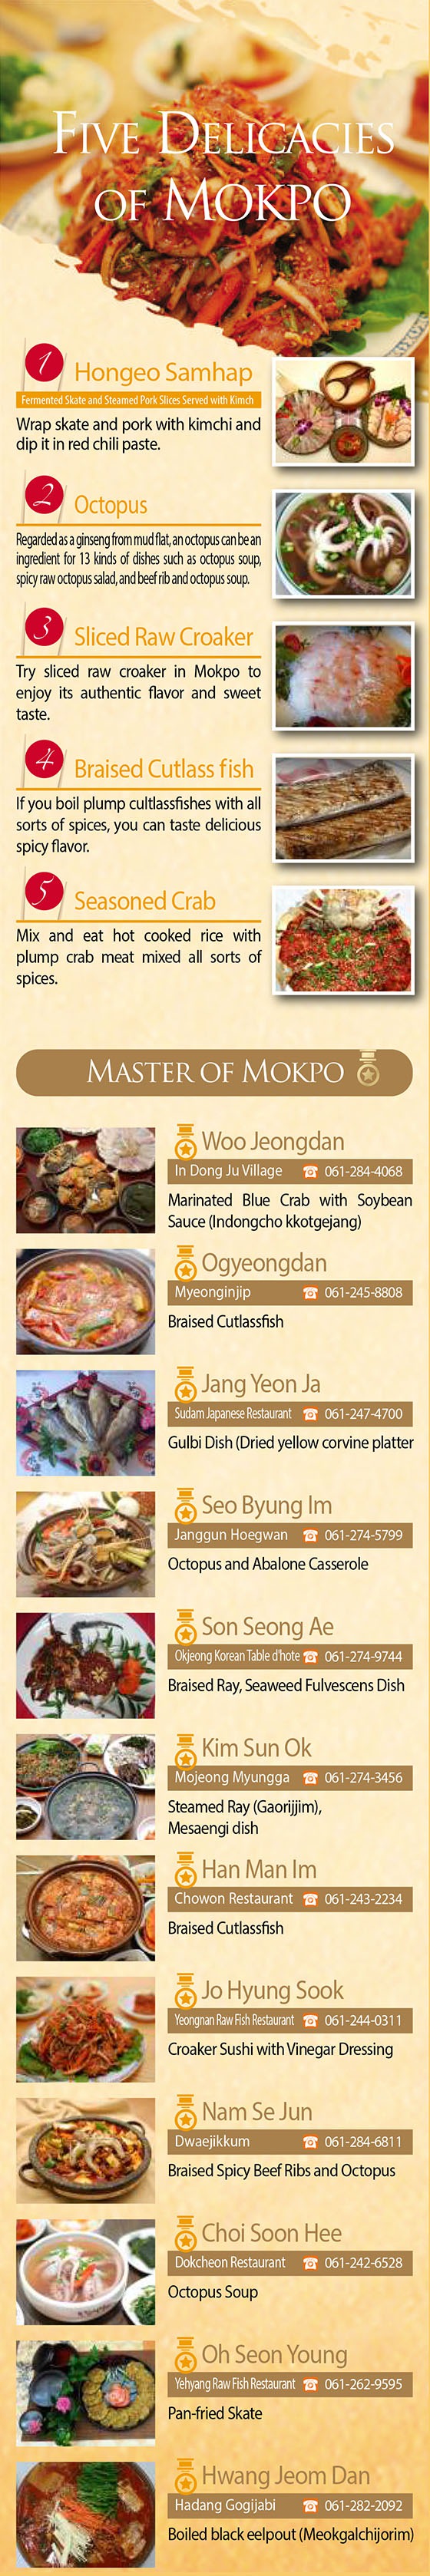 Five delicacies of Mokpo